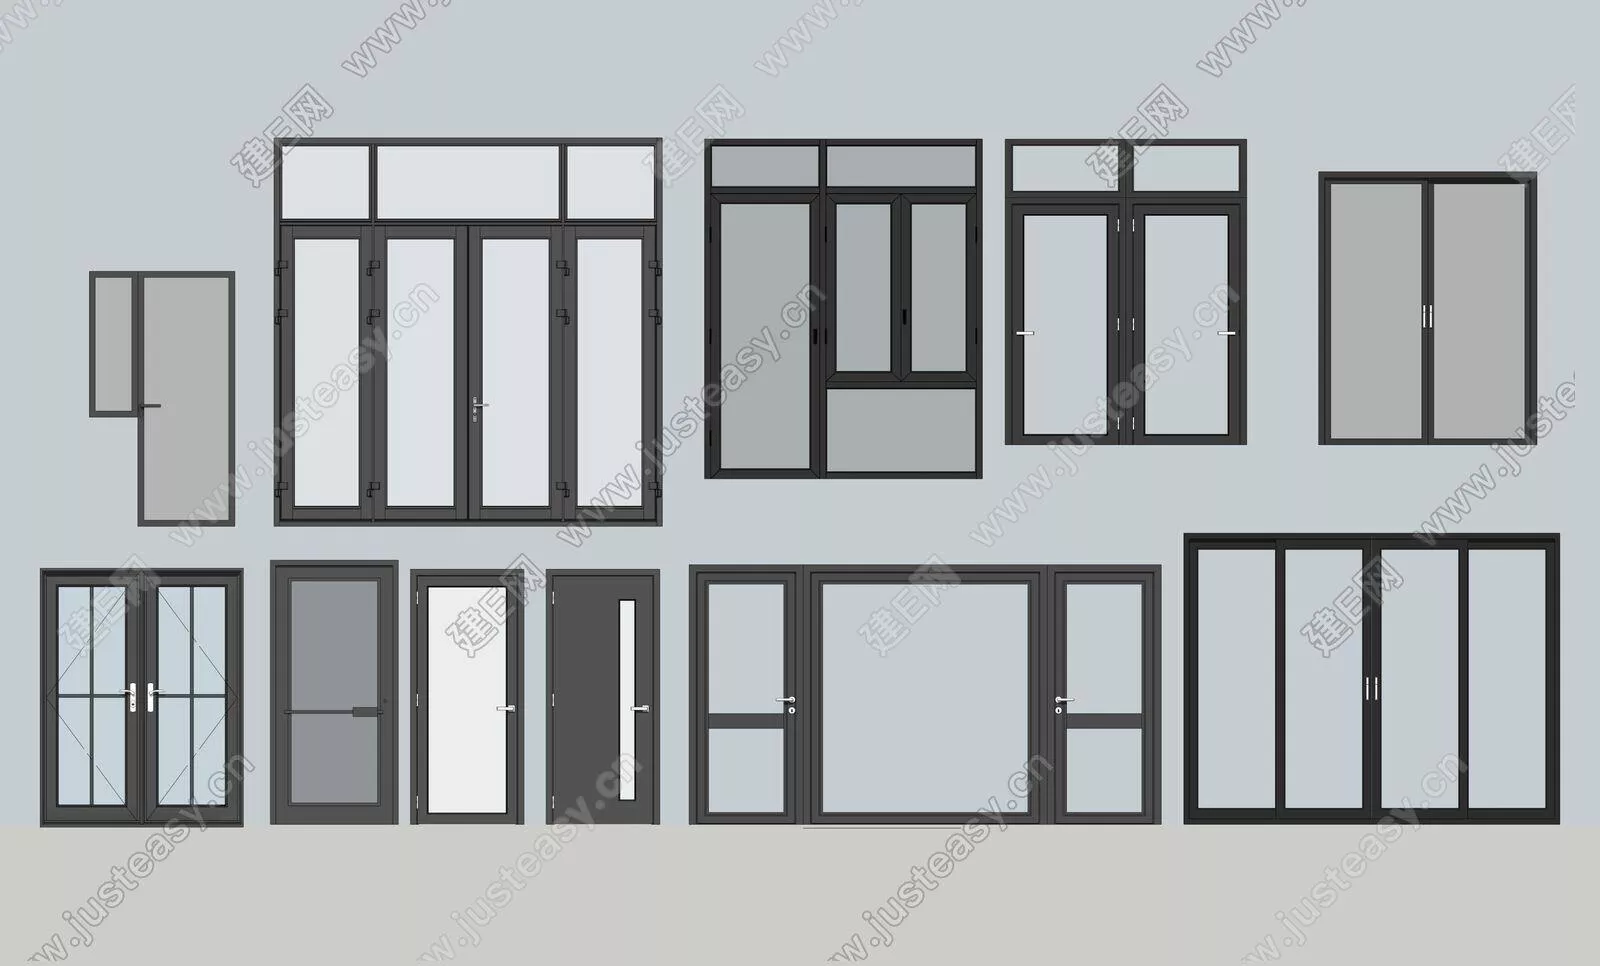 MODERN DOOR AND WINDOWS - SKETCHUP 3D MODEL - ENSCAPE - 112673058